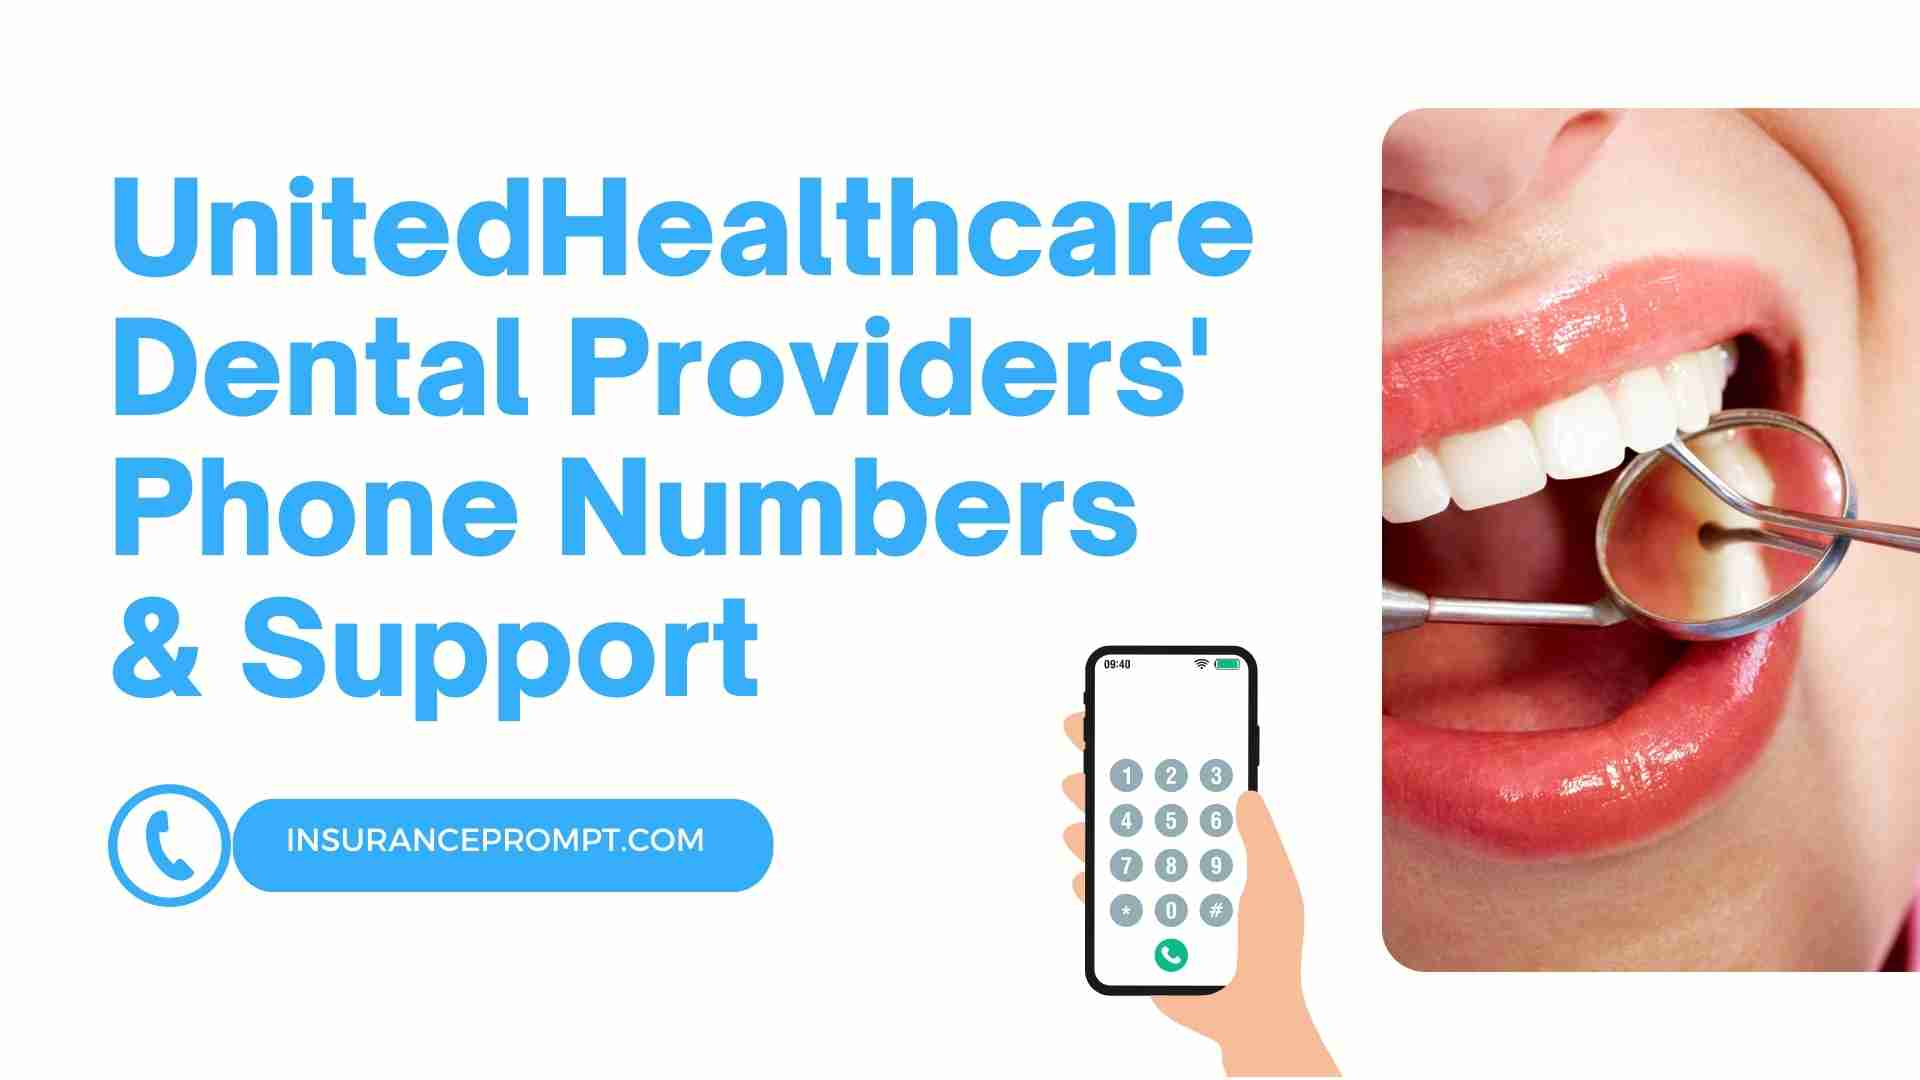 UnitedHealthcare Dental Providers' Phone Numbers